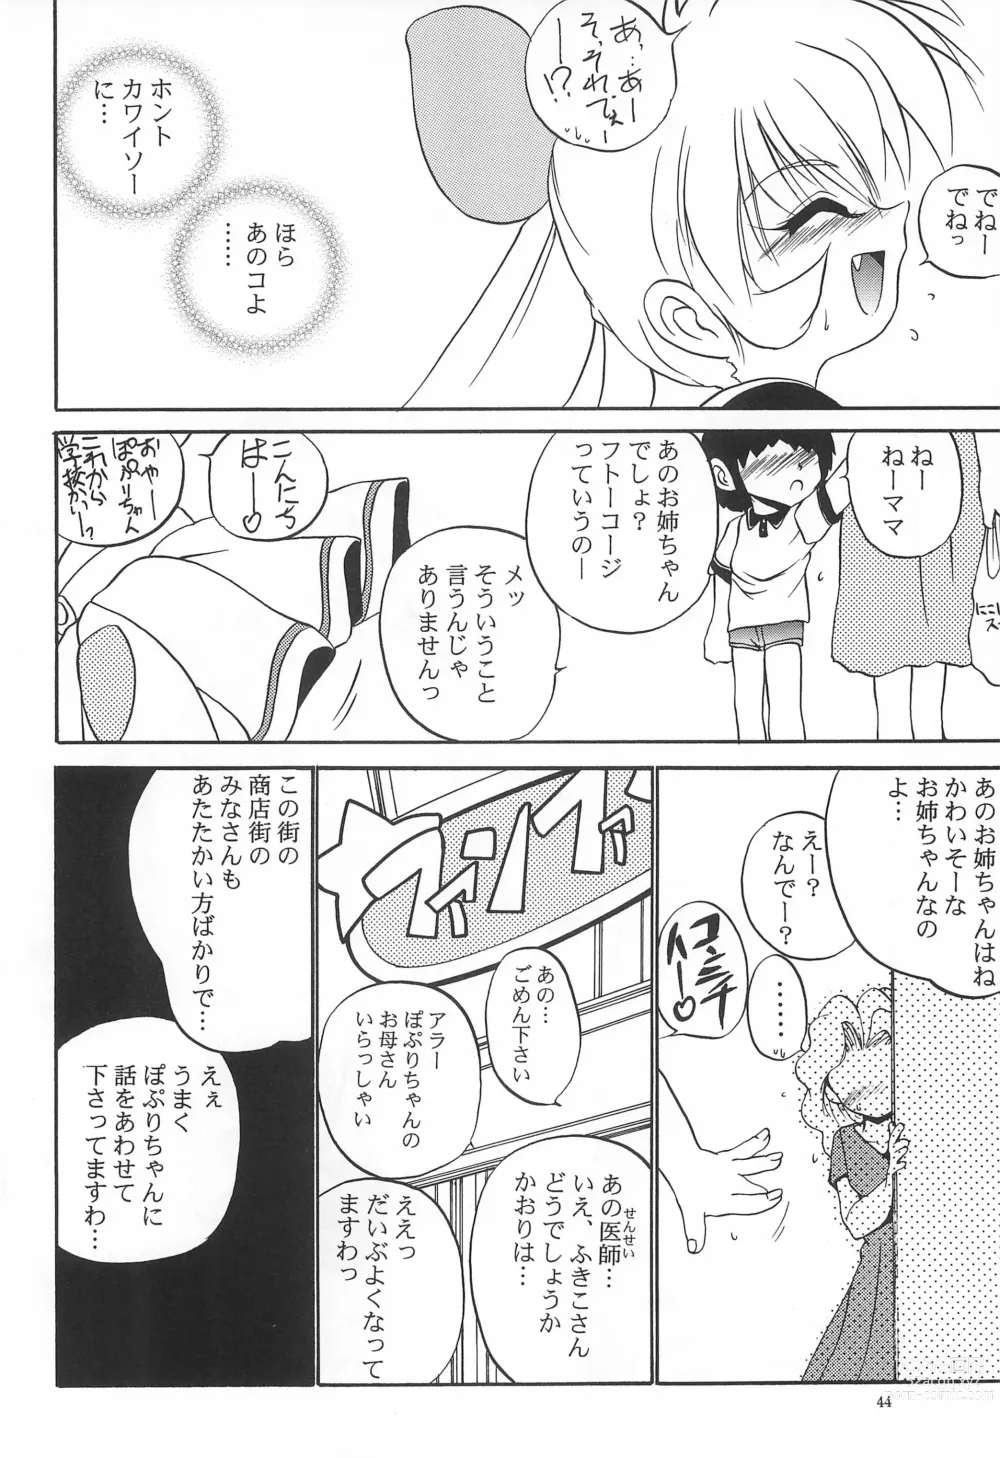 Page 44 of doujinshi Mahou Shoujo Daisakusen